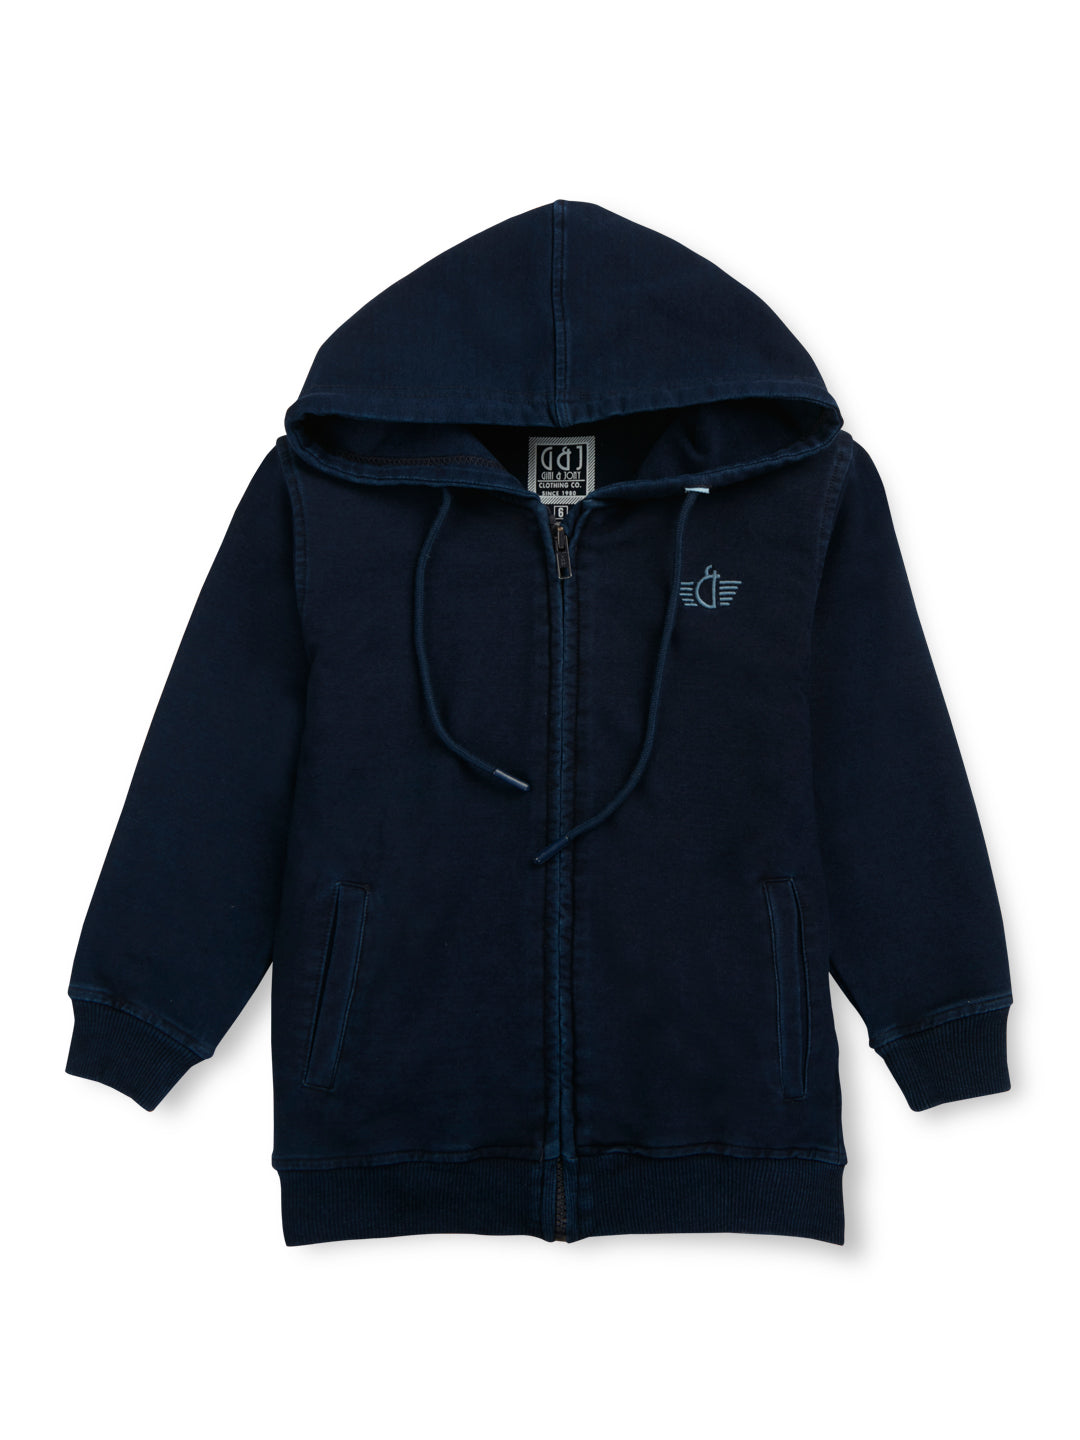 Boys Navy Blue Solid Fleece Full Sleeves Woven Jacket